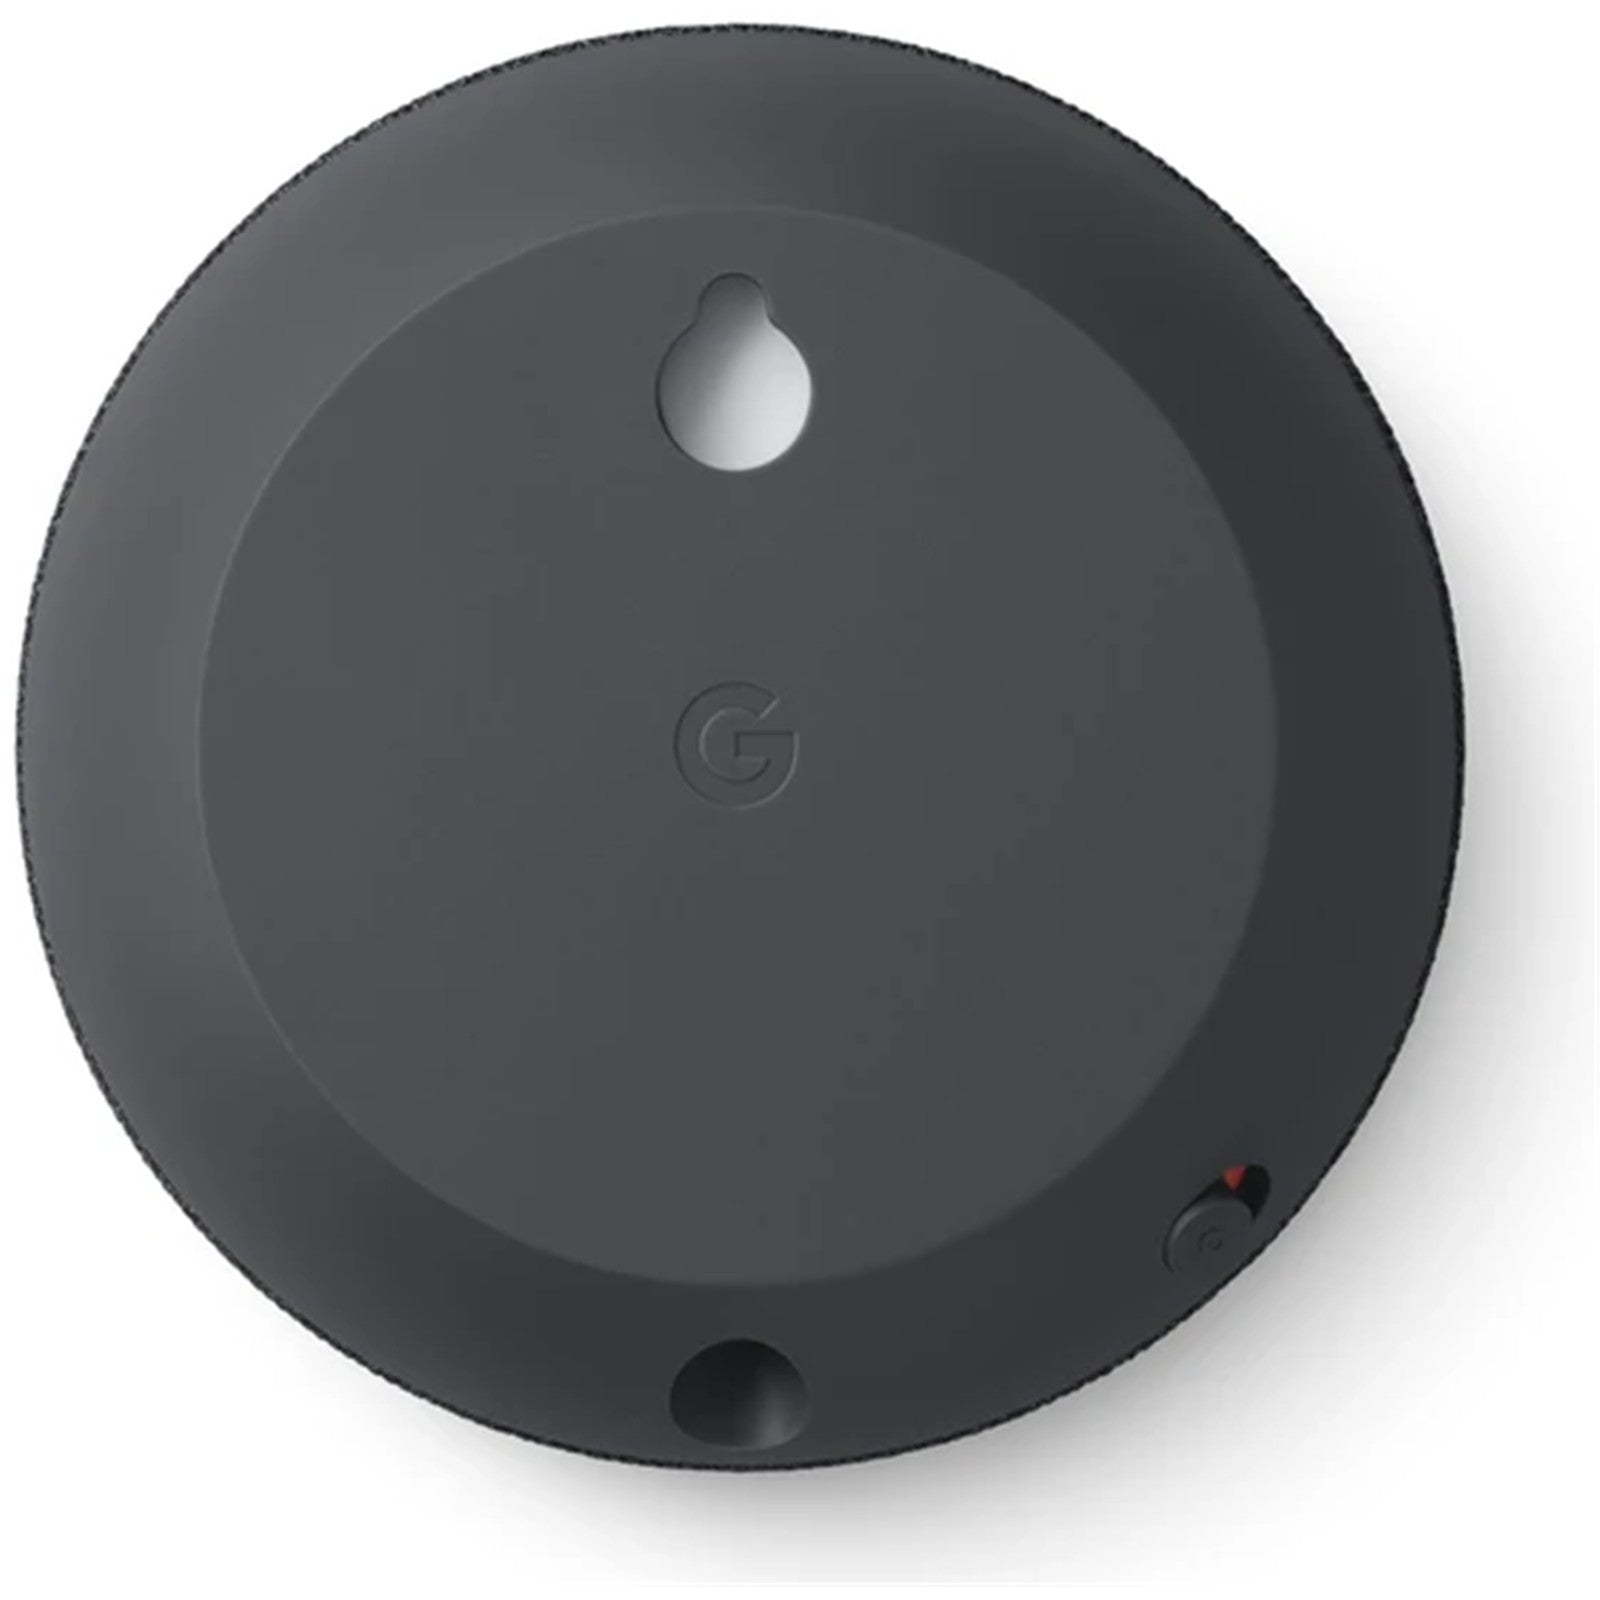 Google Nest Mini Smart Speaker with Google Assistant (Charcoal)